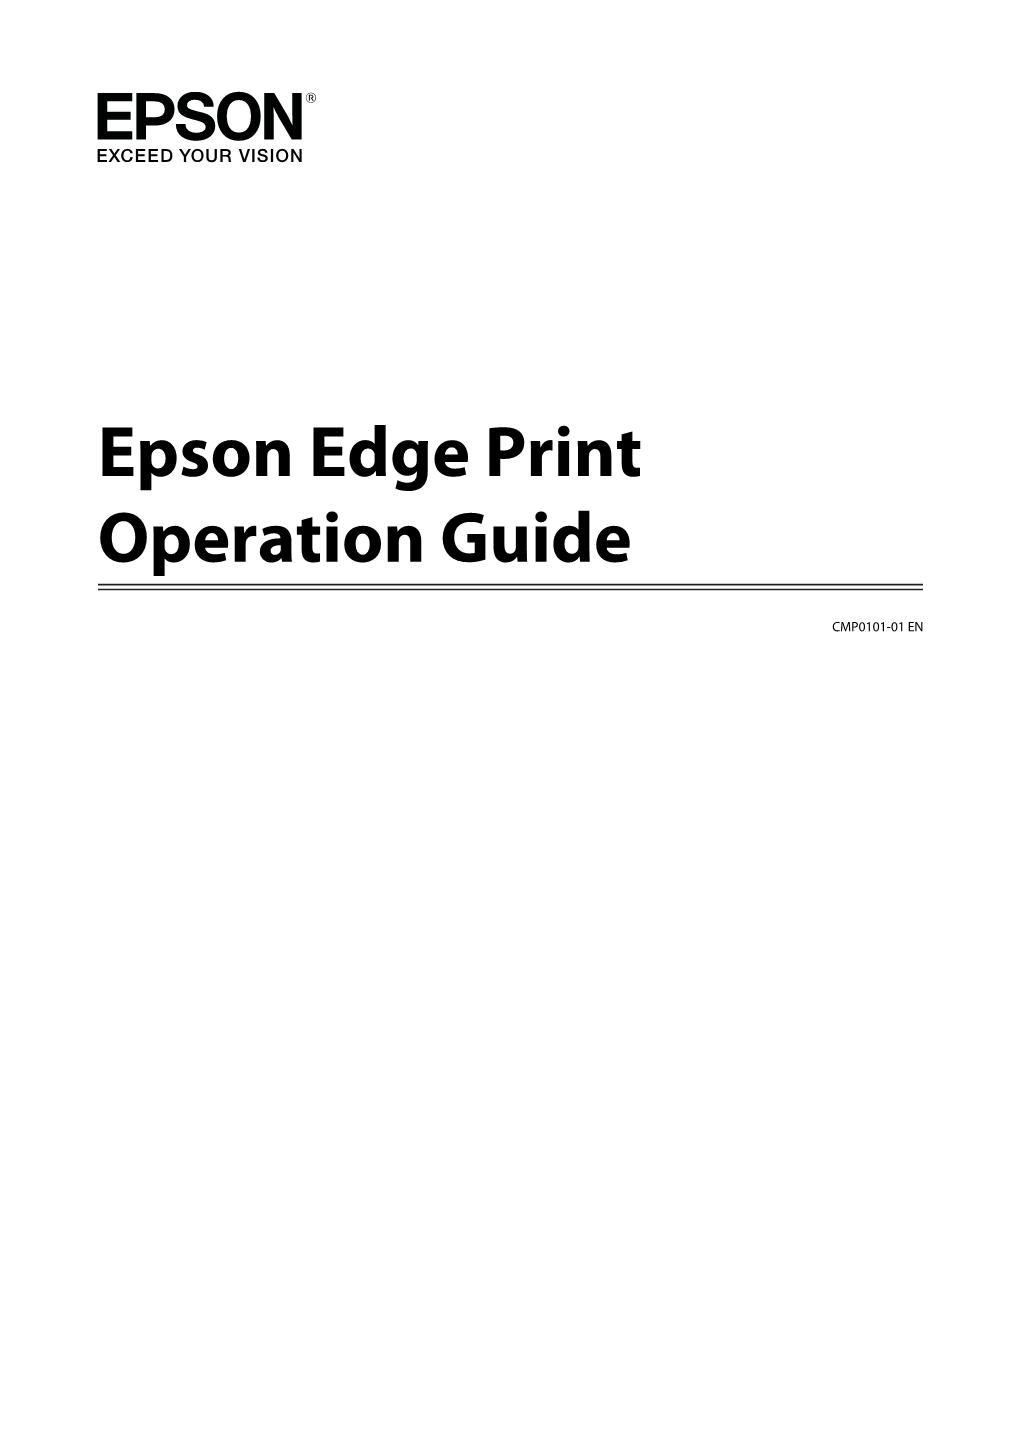 Epson Edge Print Operation Guide